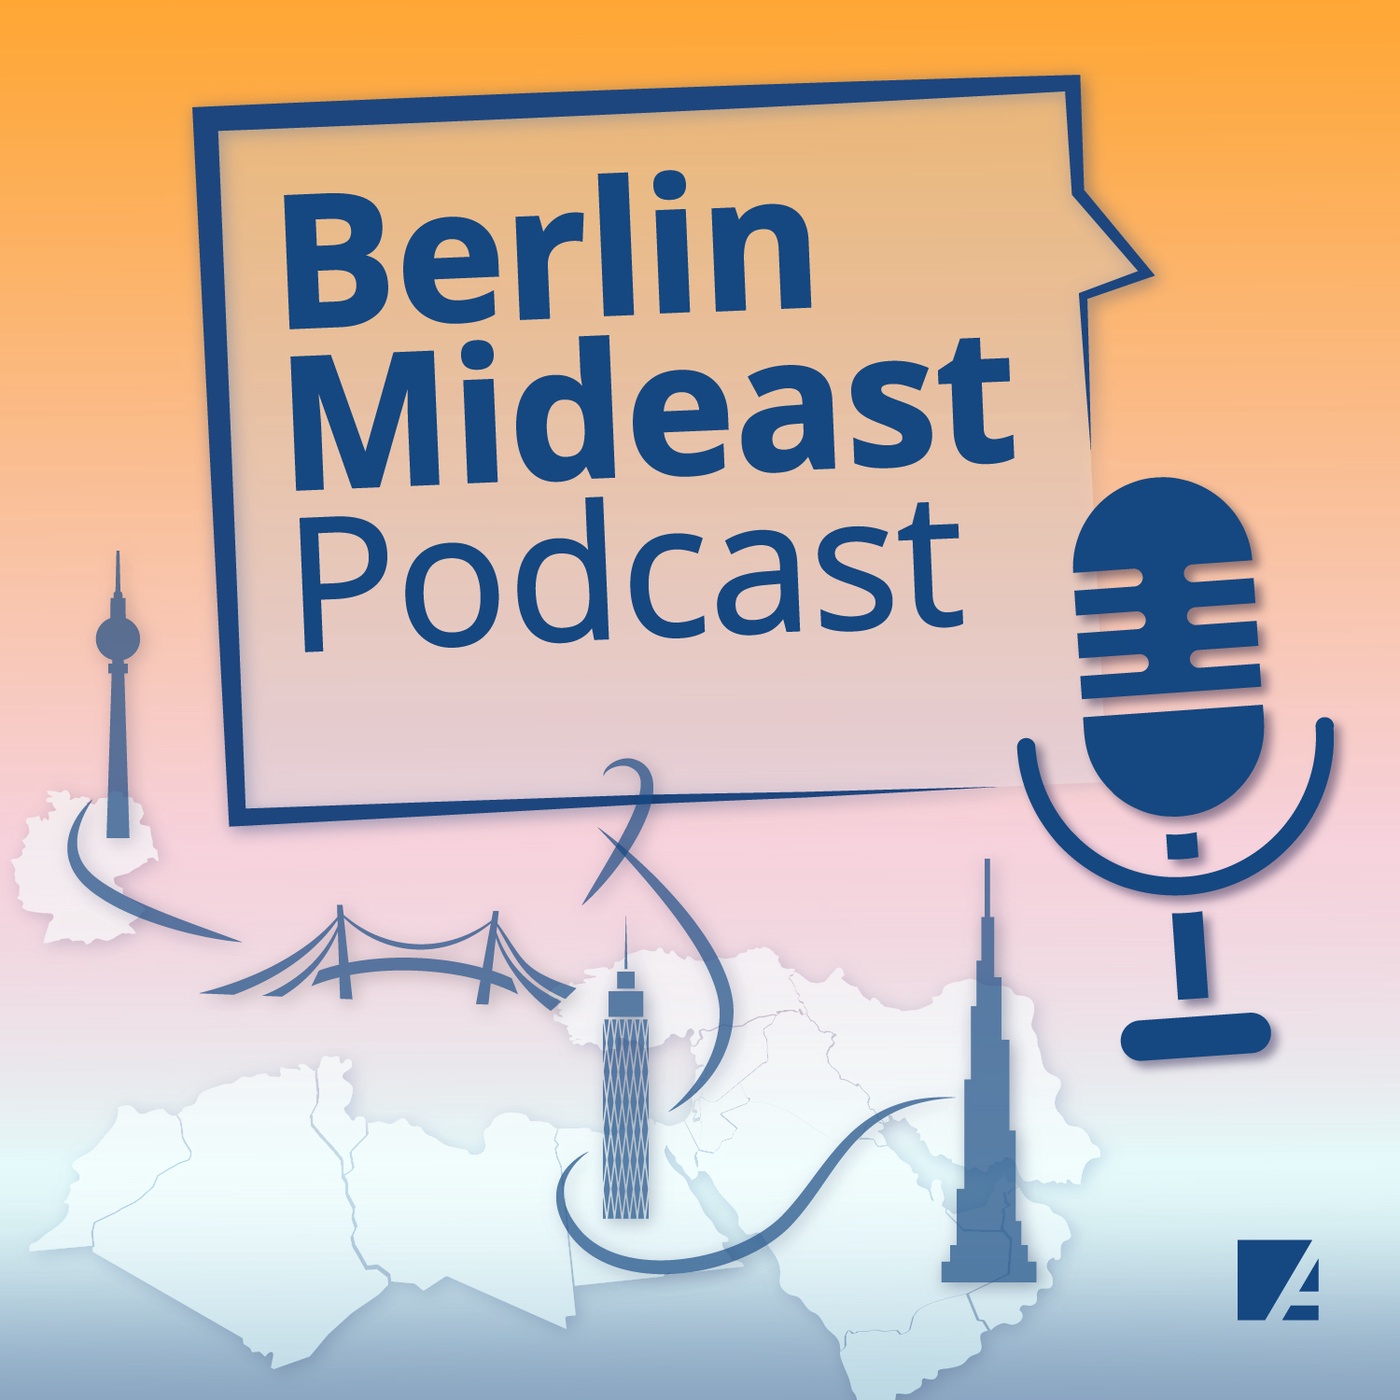 Berlin Mideast Podcast